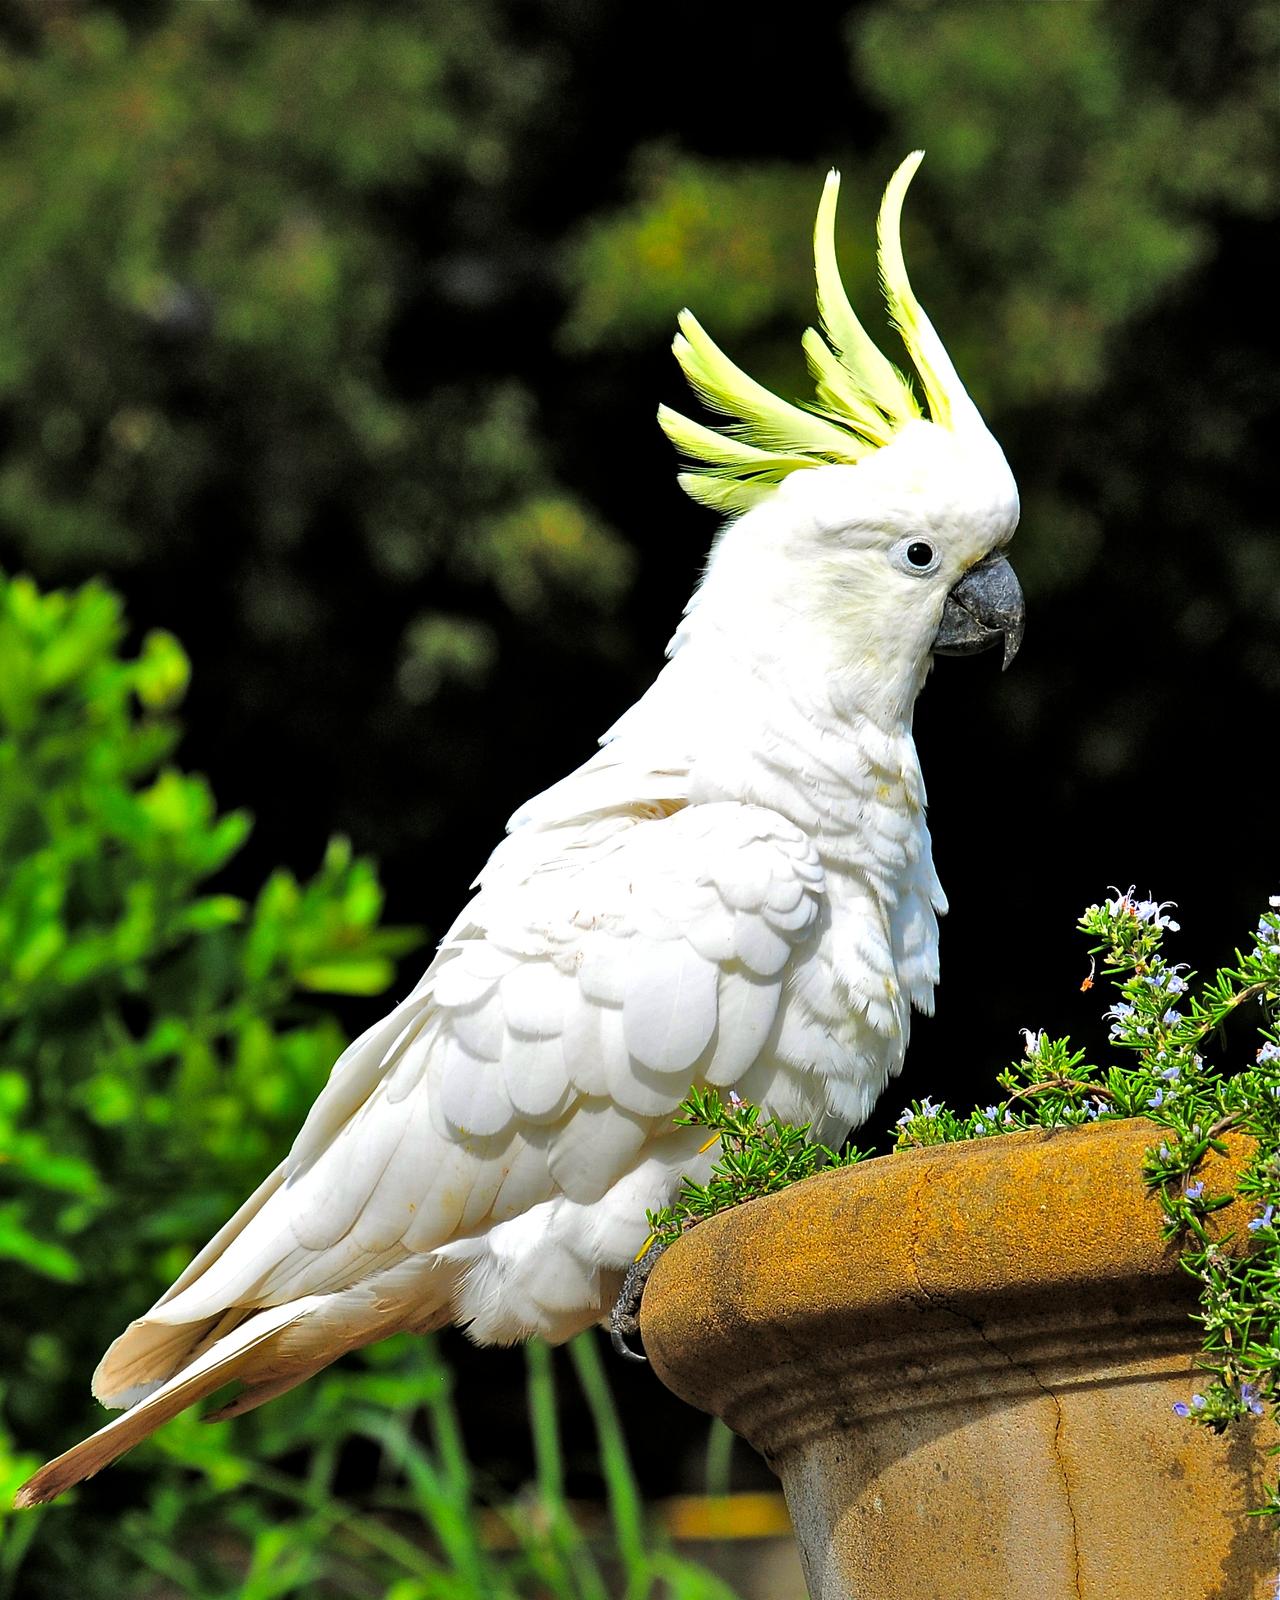 Sulphur-crested Cockatoo Photo by Gerald Friesen